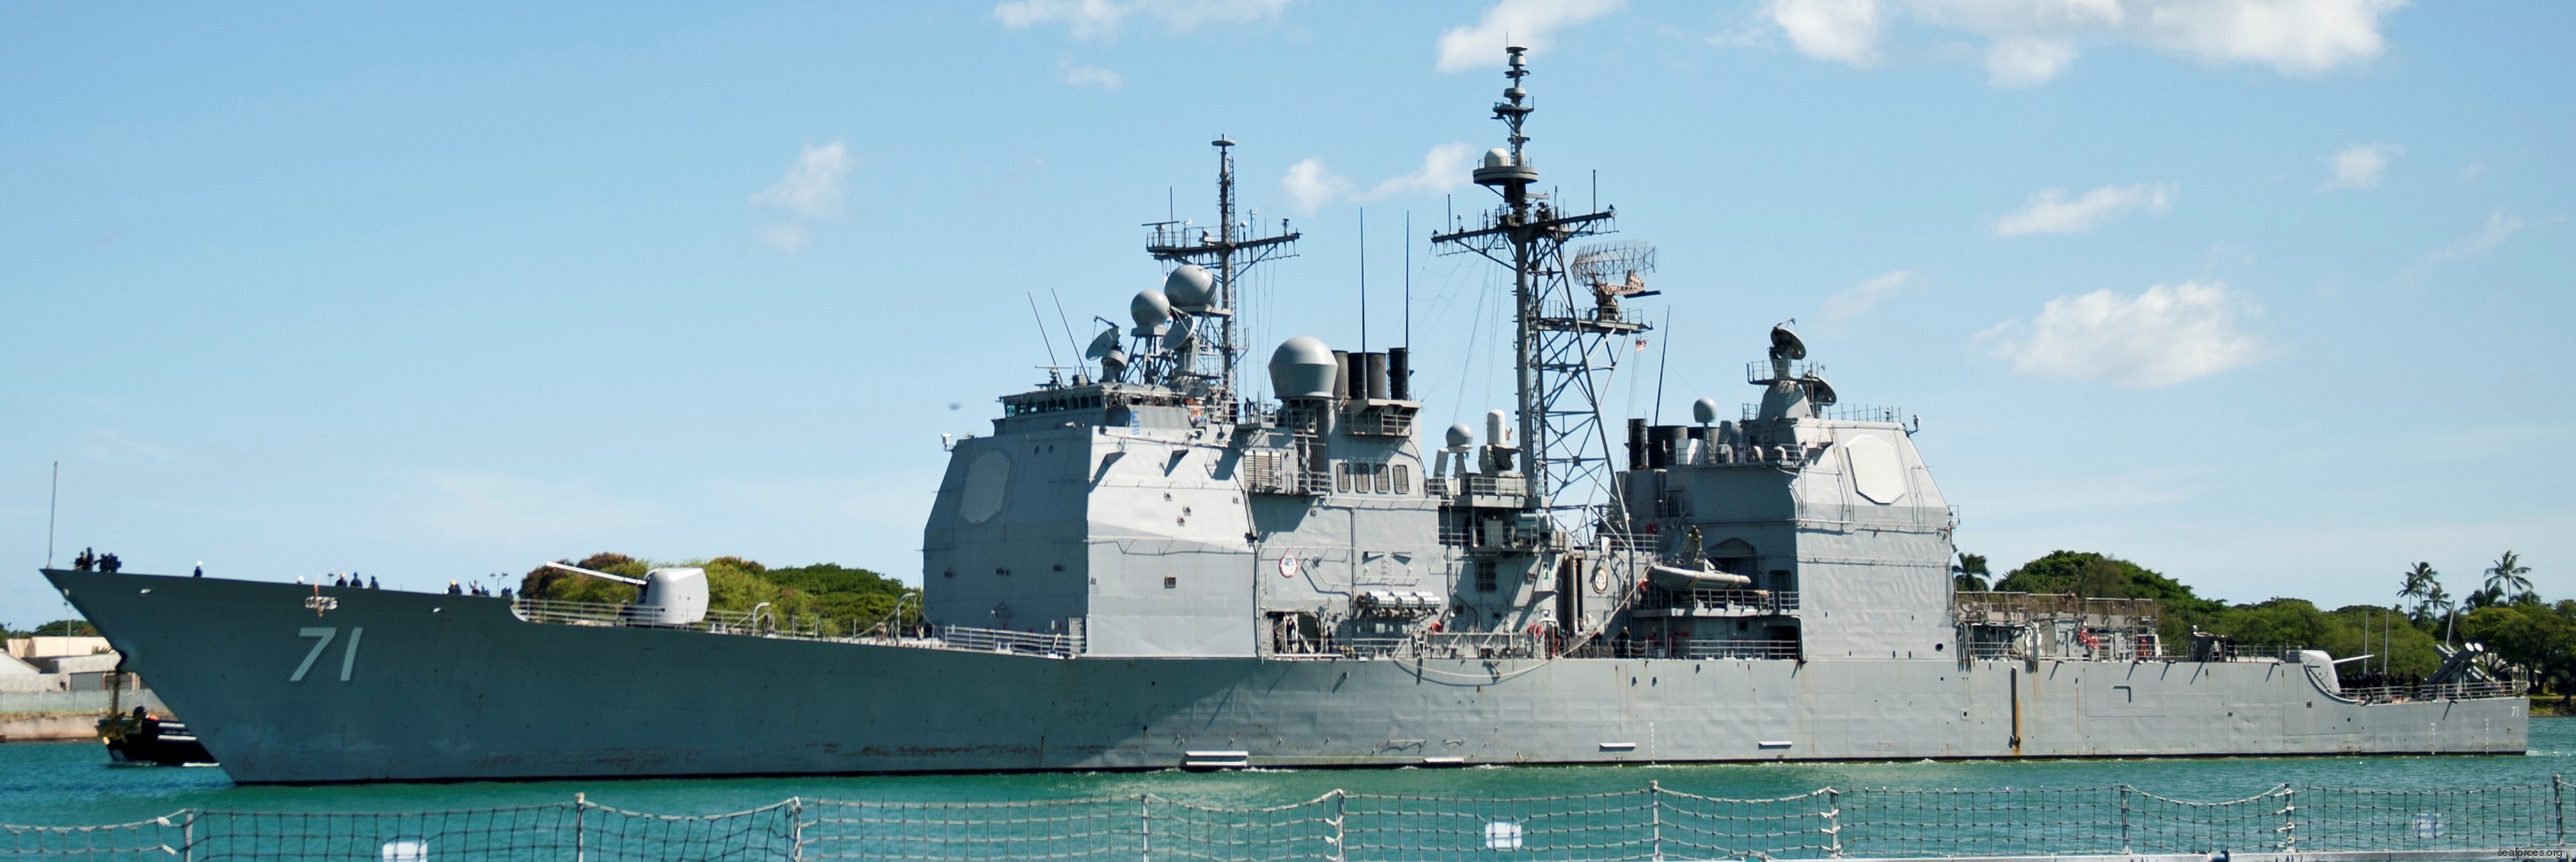 cg-71 uss cape st. george ticonderoga class guided missile cruiser us navy 69 pearl harbor hickam hawaii